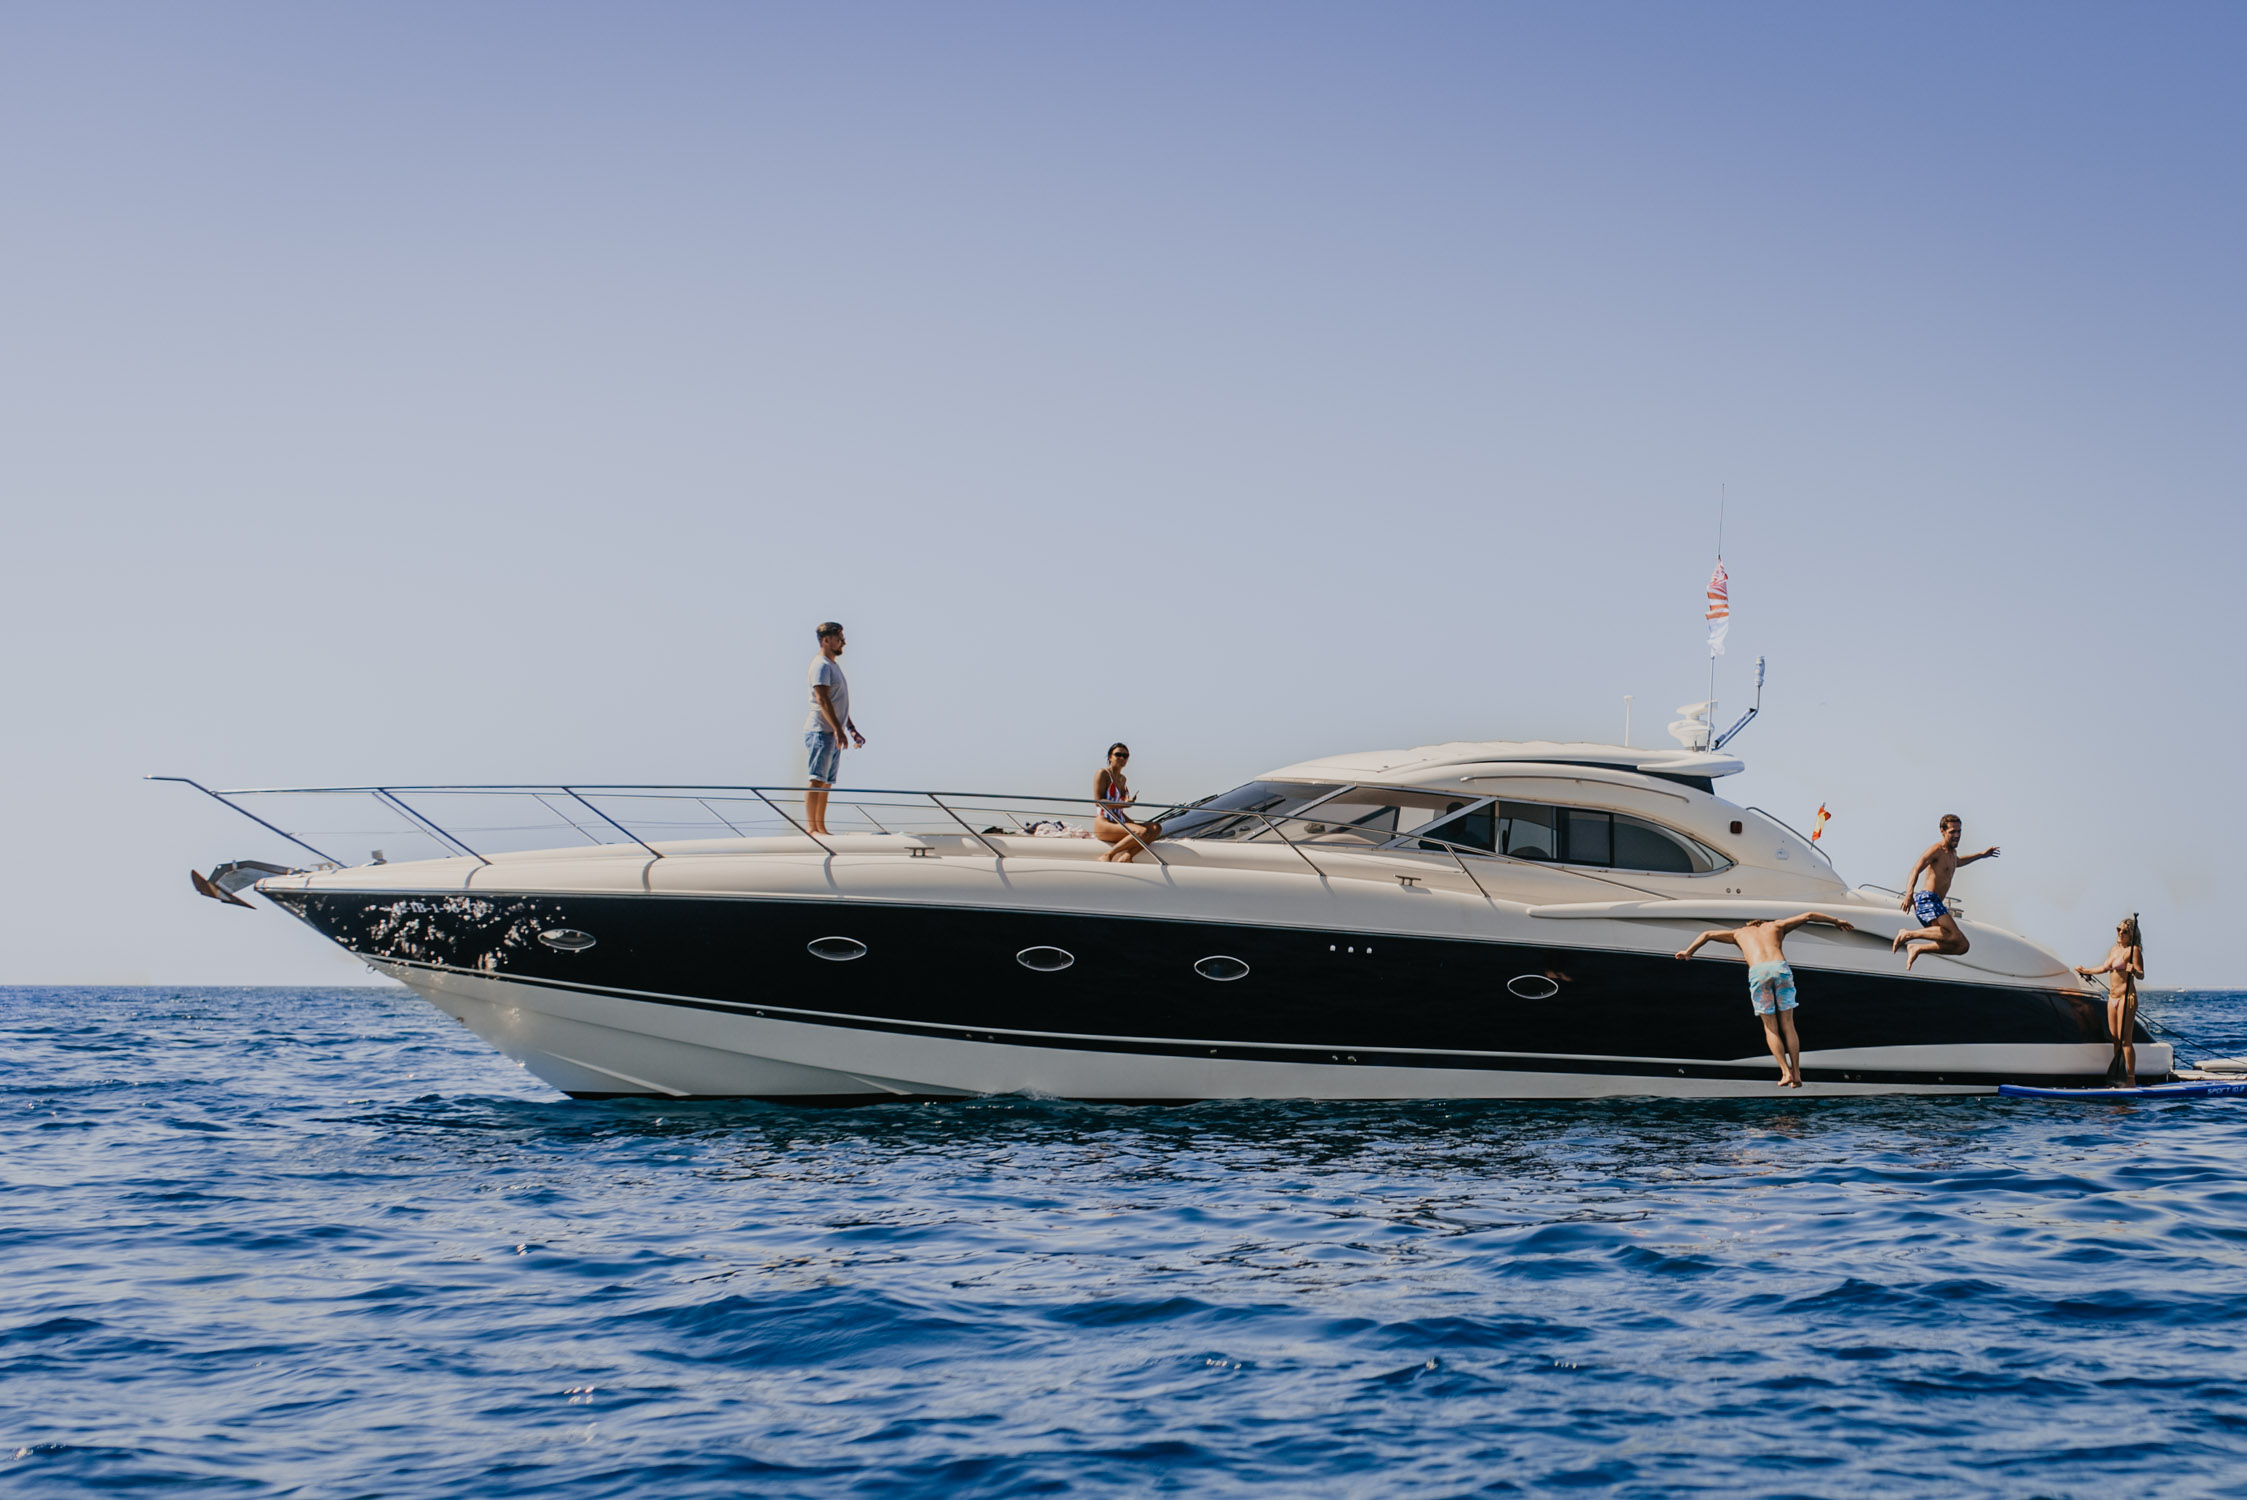 Power boat FOR CHARTER, year 2014 brand Sunseeker and model Predator 58, available in Marina Vela Barcelona Barcelona España